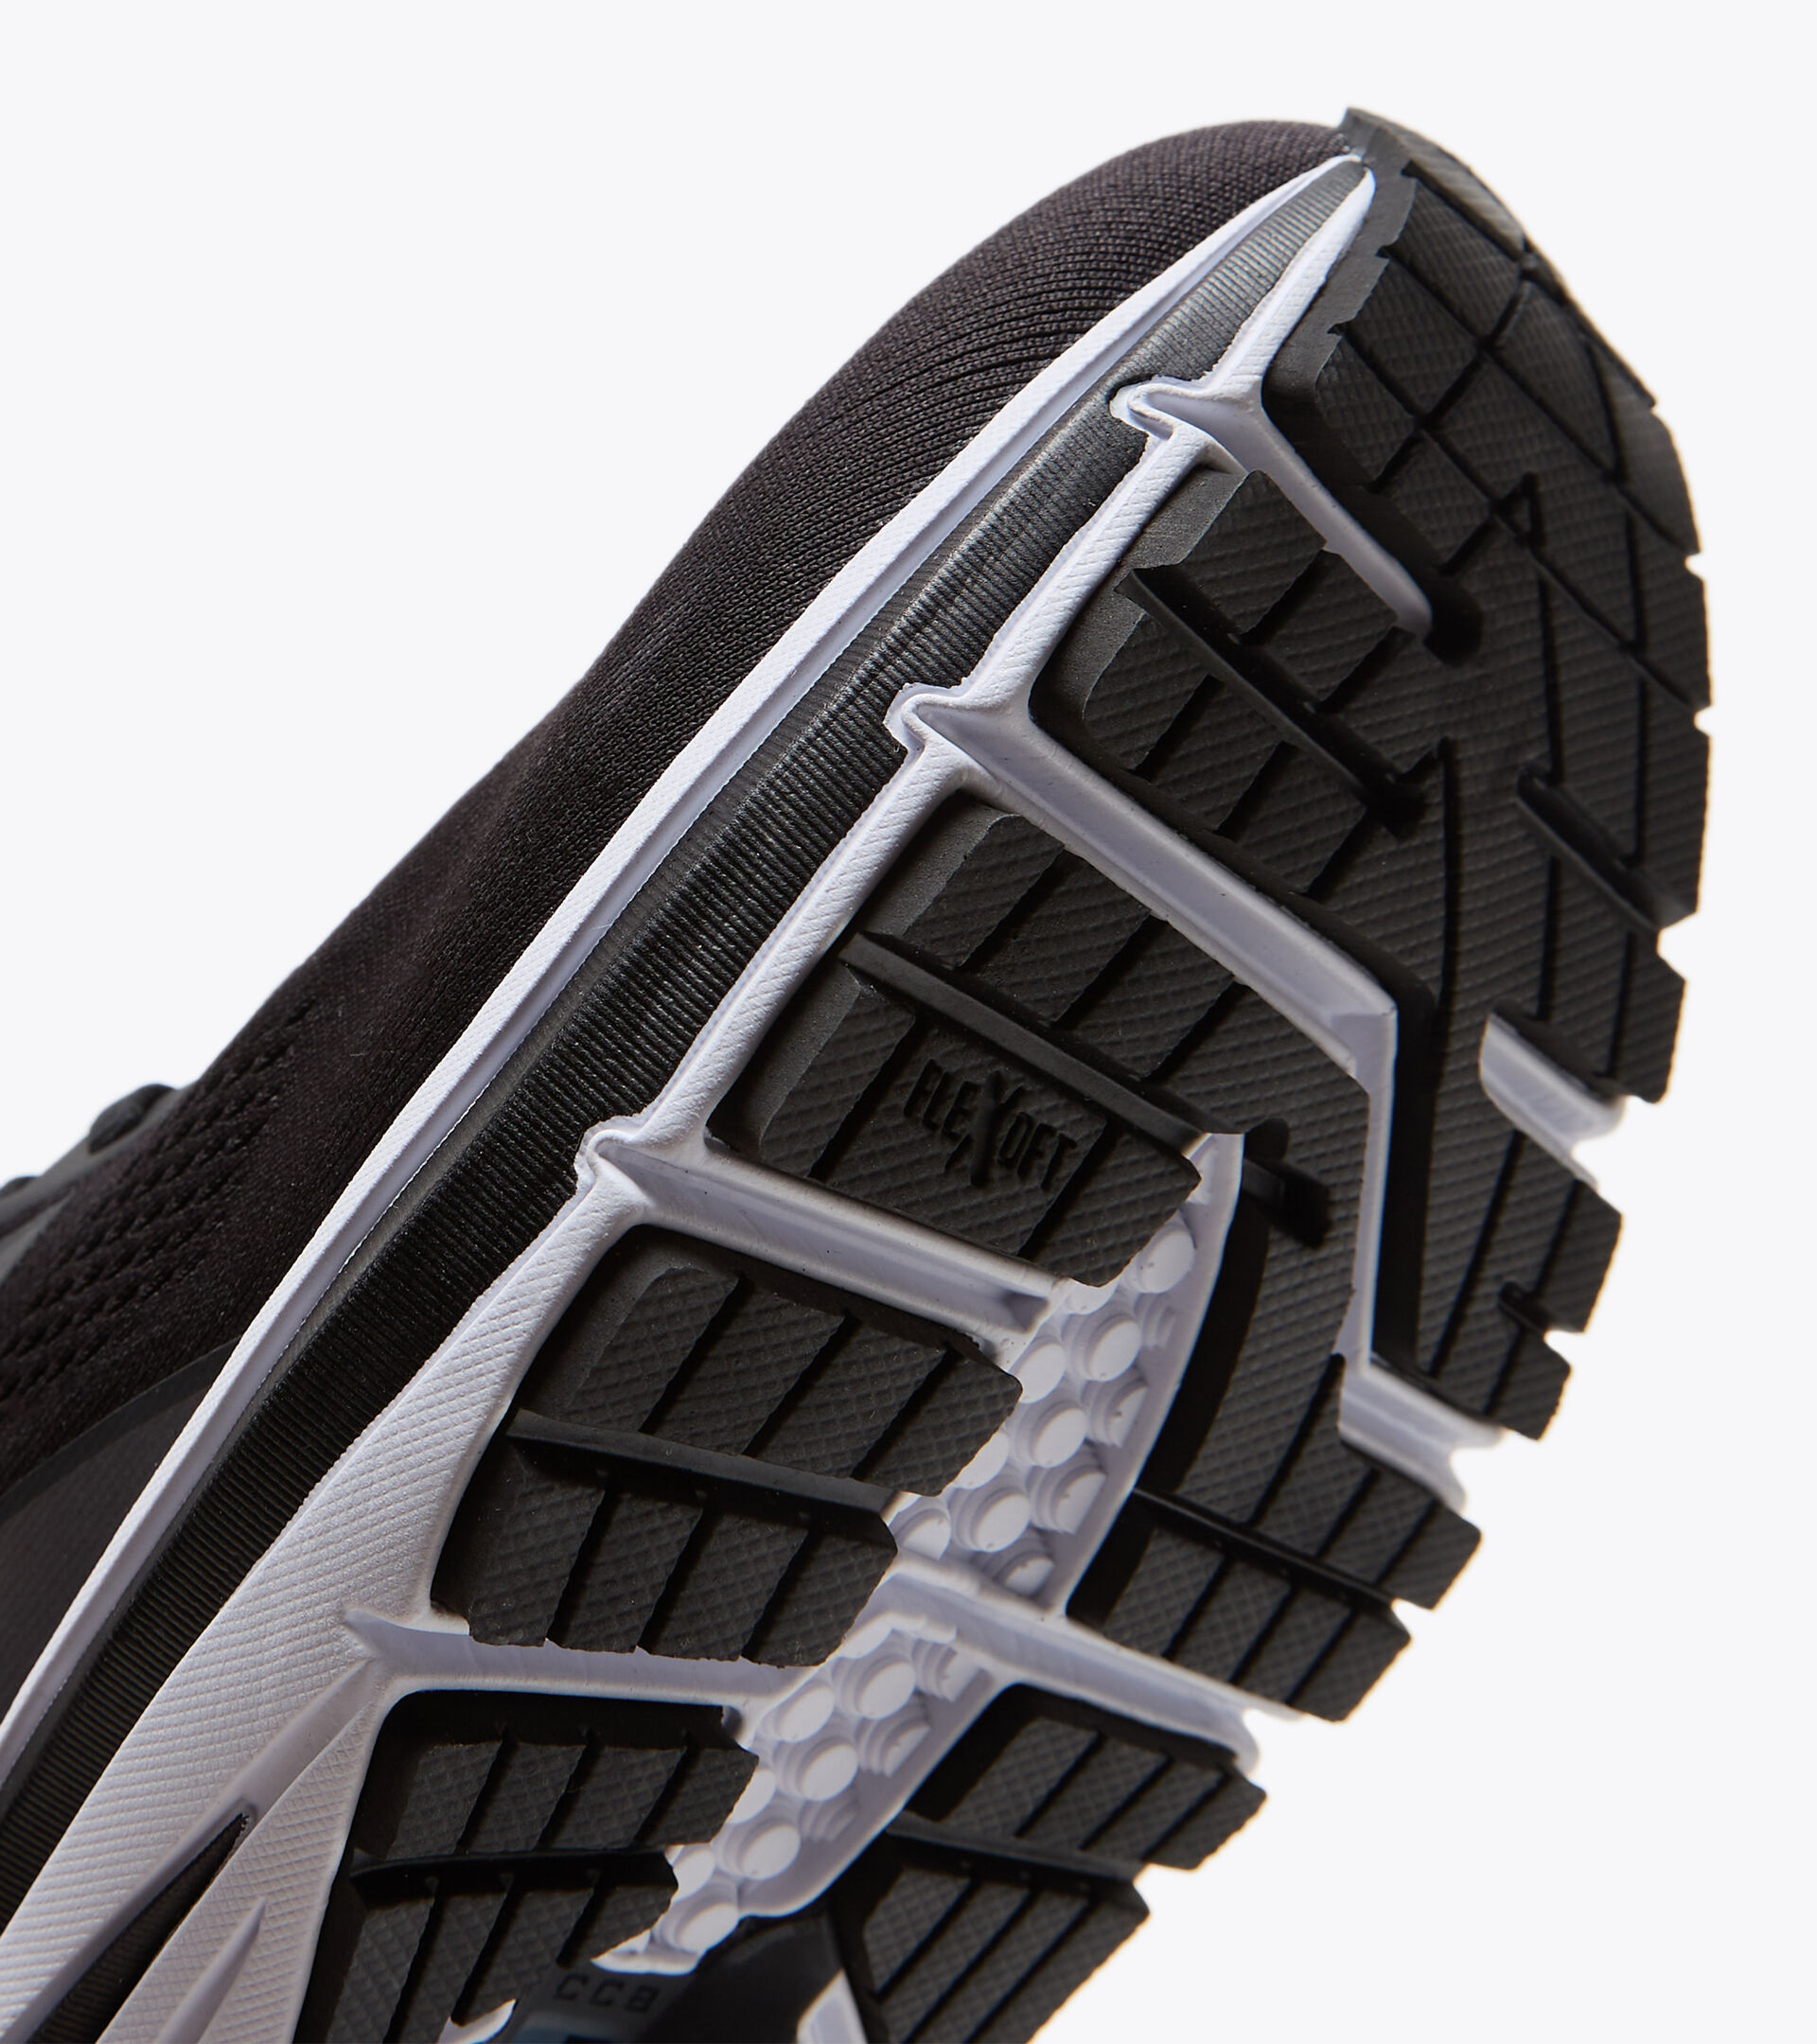 Running shoes - Men MYTHOS BLUSHIELD 7 VORTICE HIP BLACK/WHITE (C7406) - Diadora